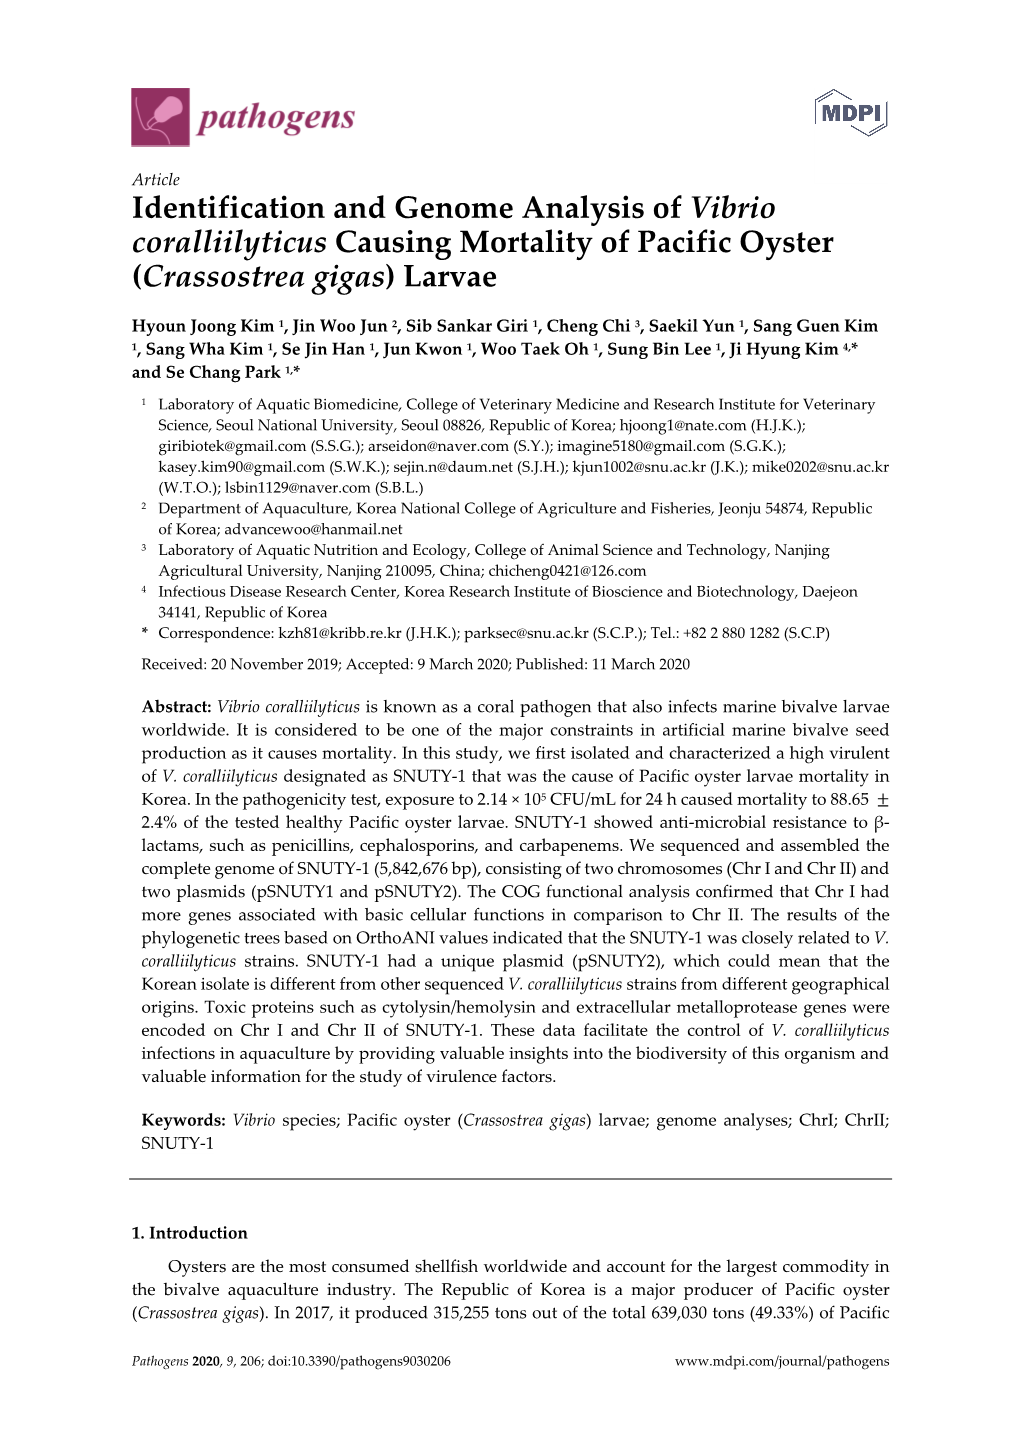 Identification and Genome Analysis of Vibrio Coralliilyticus Causing Mortality of Pacific Oyster (Crassostrea Gigas) Larvae